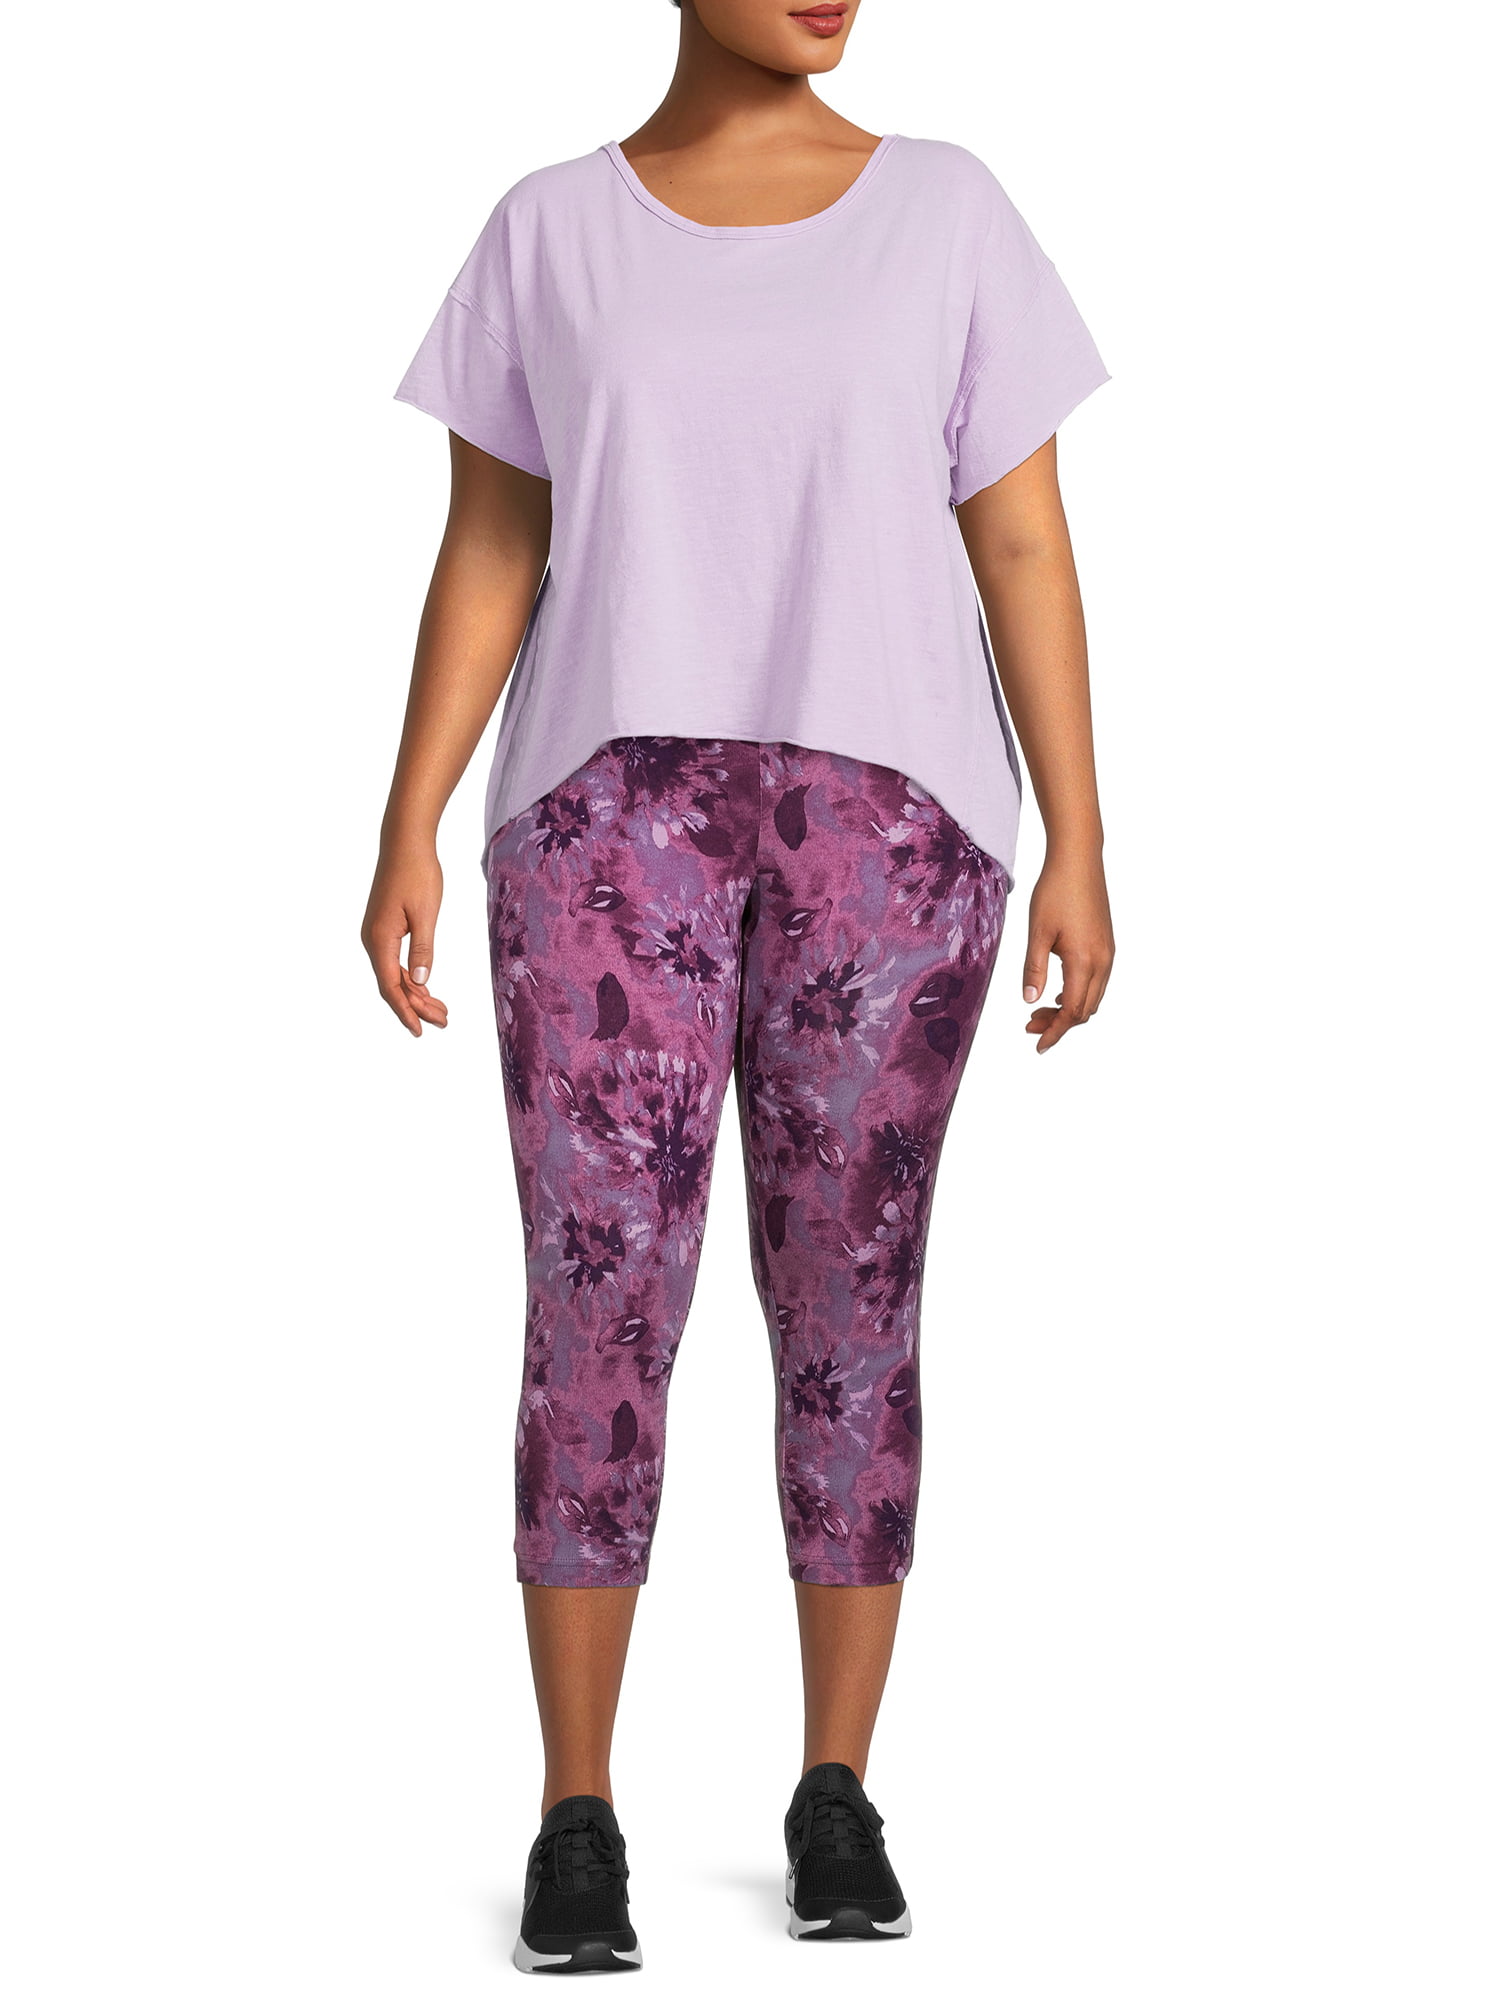 New Terra & Sky Purple Floral Full Length Leggings Super soft Plus Women 0x, 2x,3